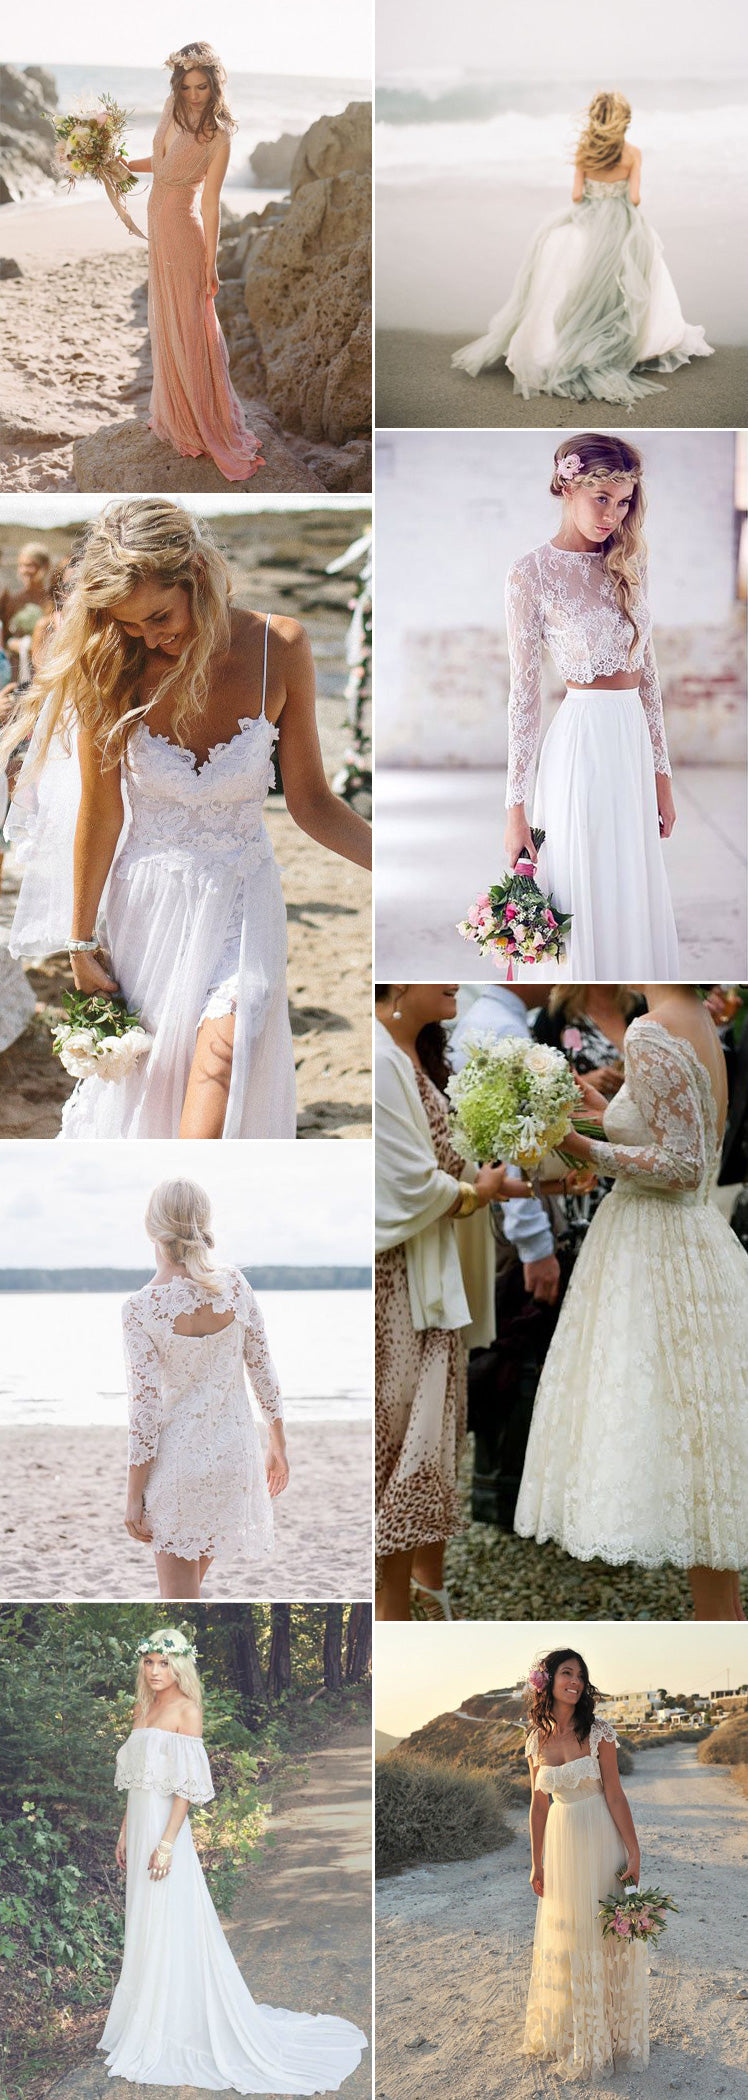 Dreamy and romantic beach wedding dresses